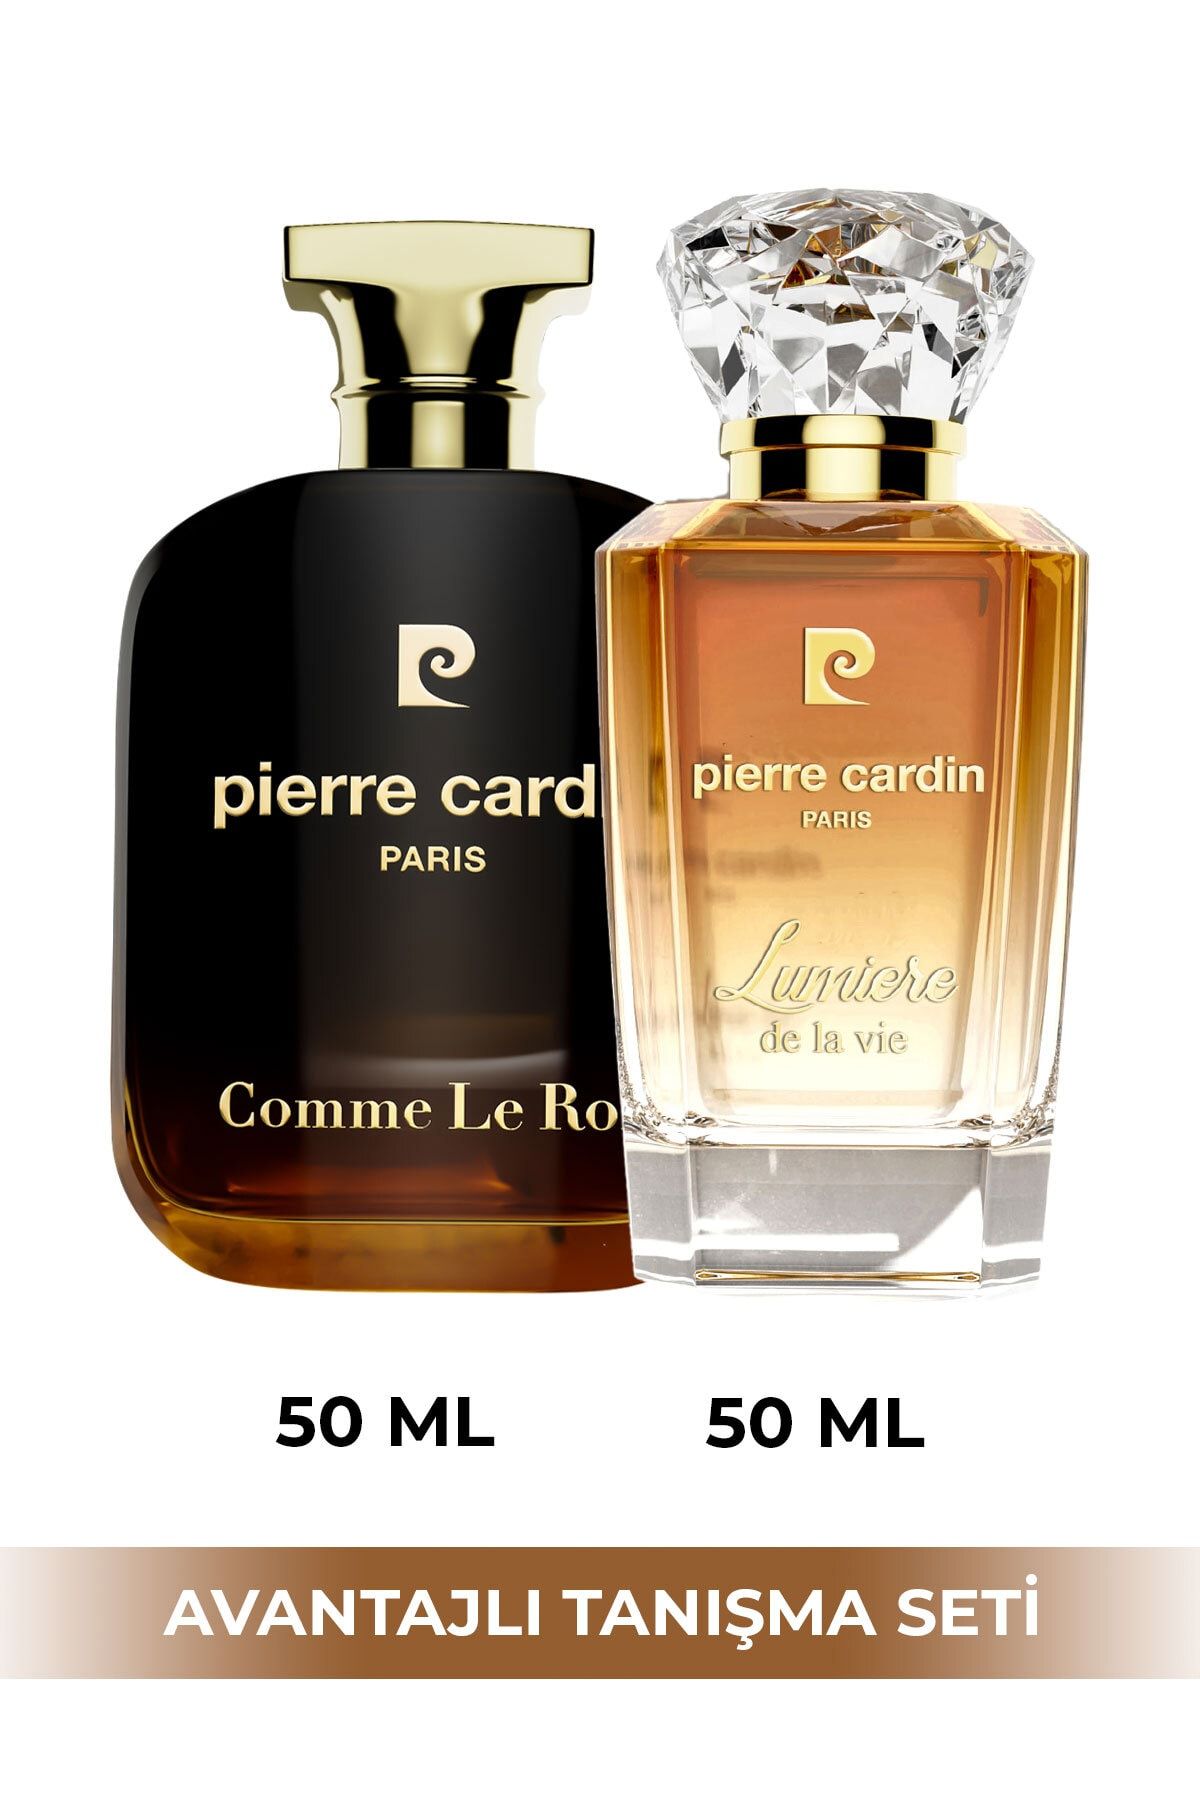 Pierre Cardin Lumiere De La Vie Edp 50 ml Kadın Ve Comme Le Roi Edp 50 ml Erkek Parfümü Seti Stcc021200